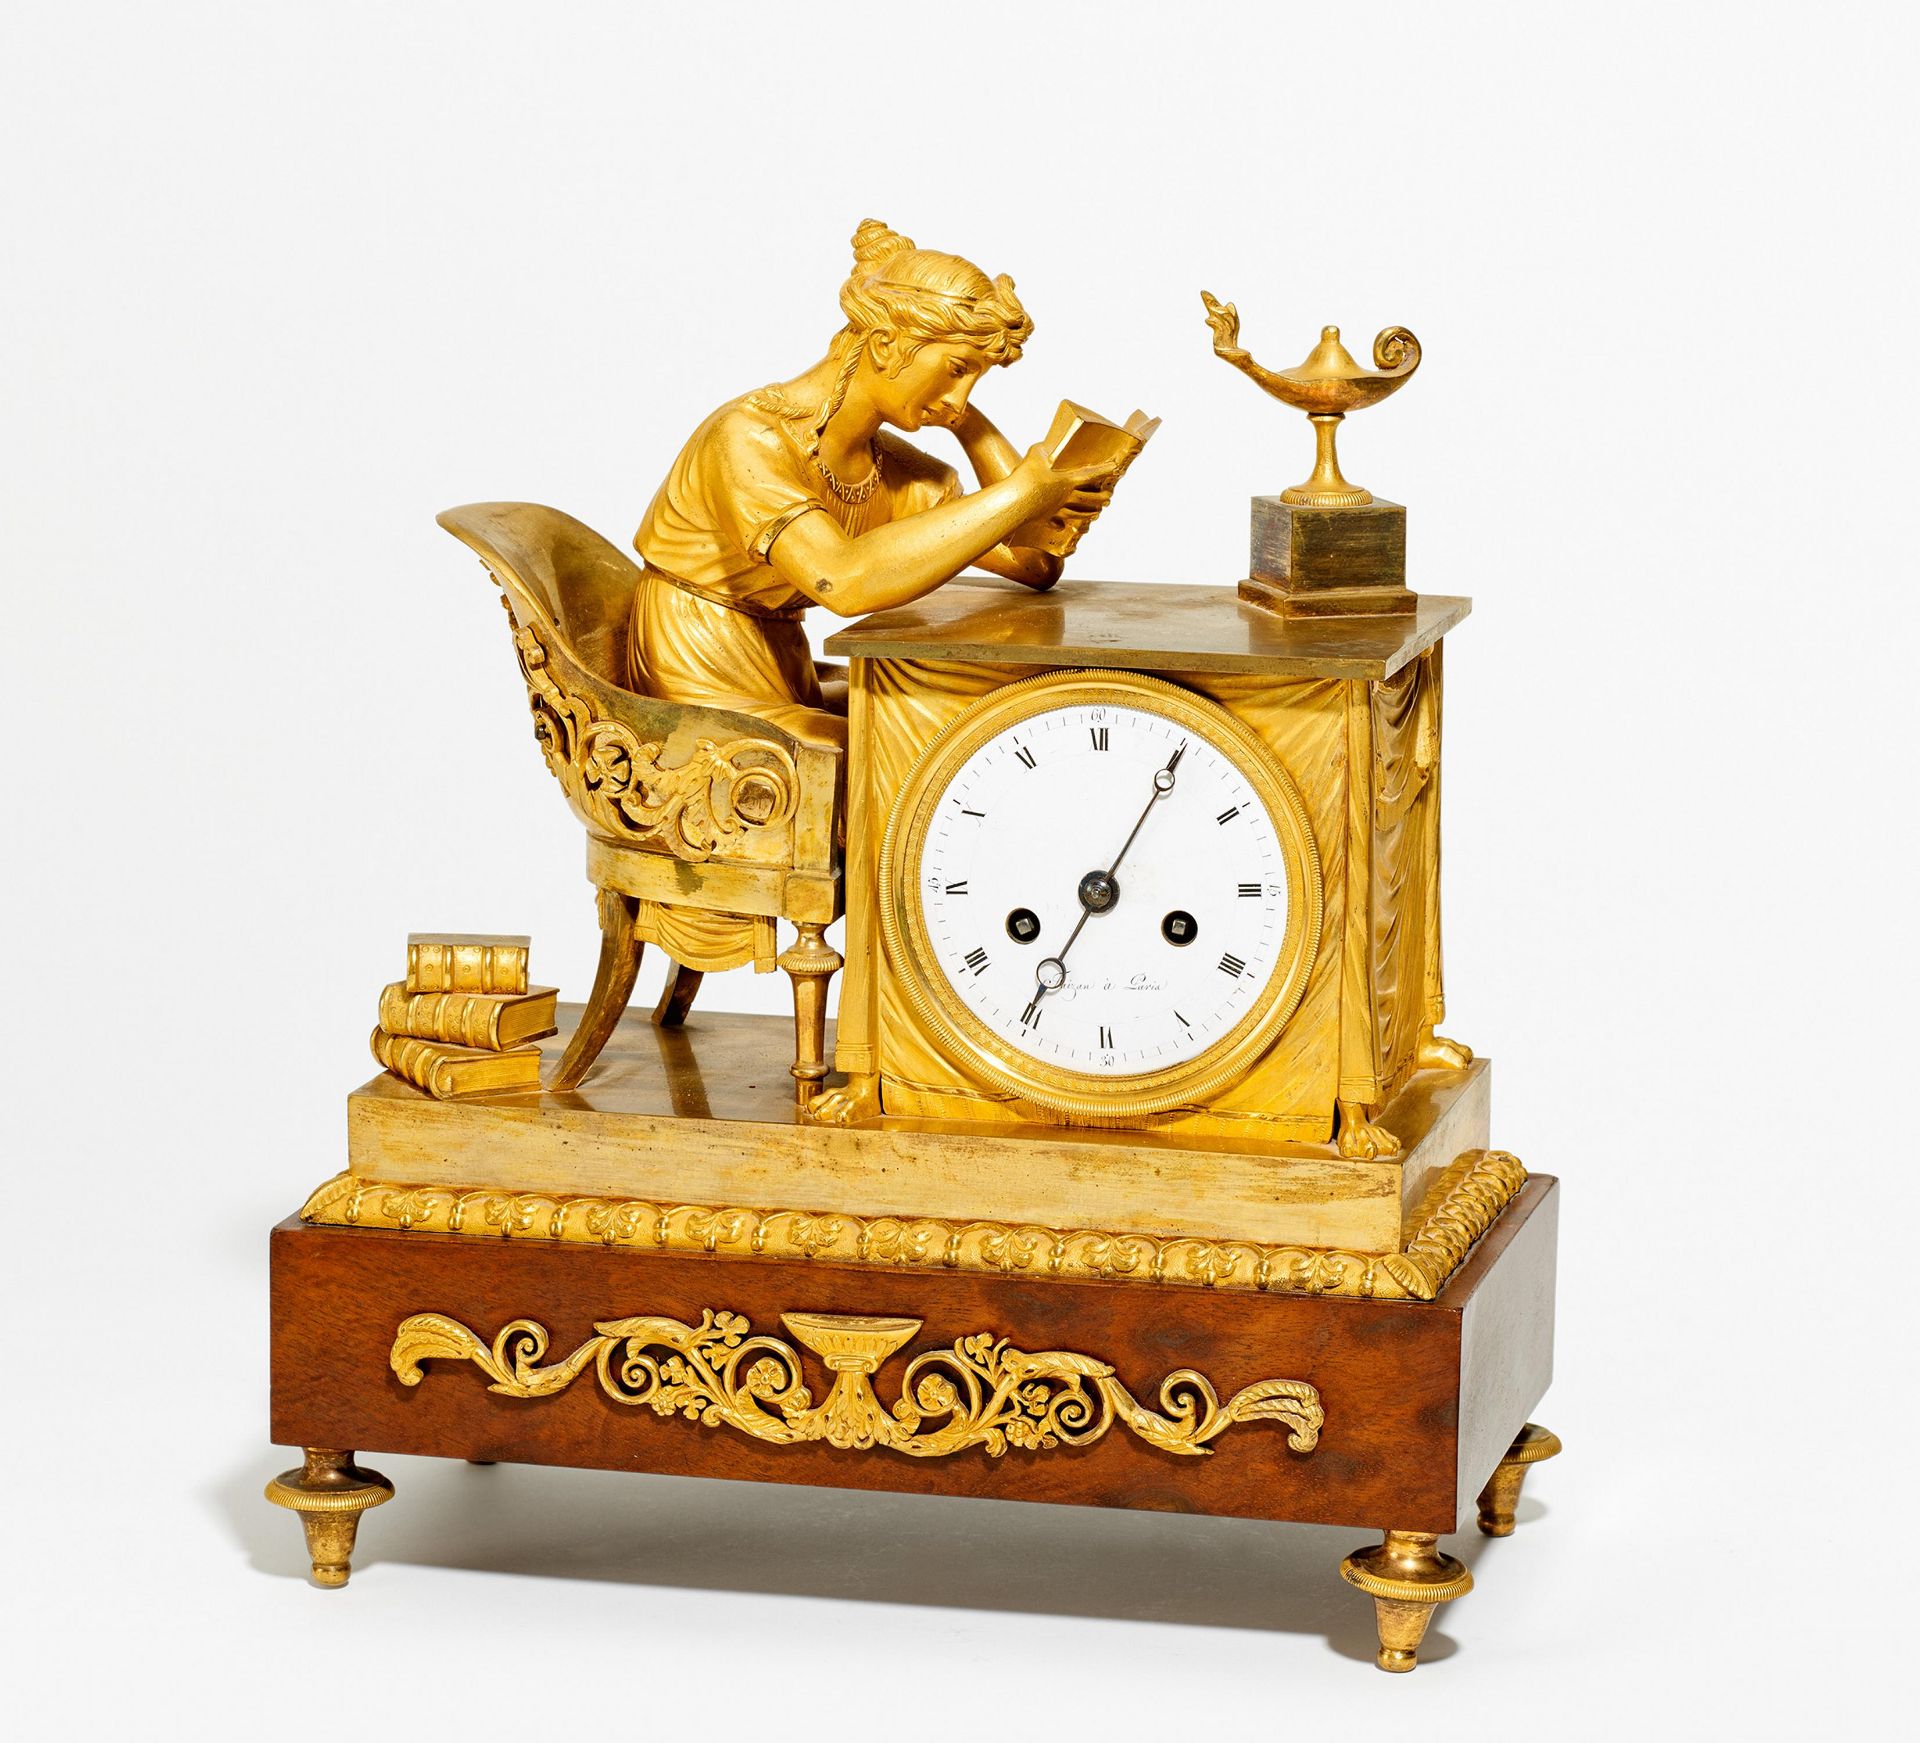 GILT BRONZE PENDULUM CLOCK "READING WOMAN". Paris. Date: Around 1810. Maker/Designer: The movement